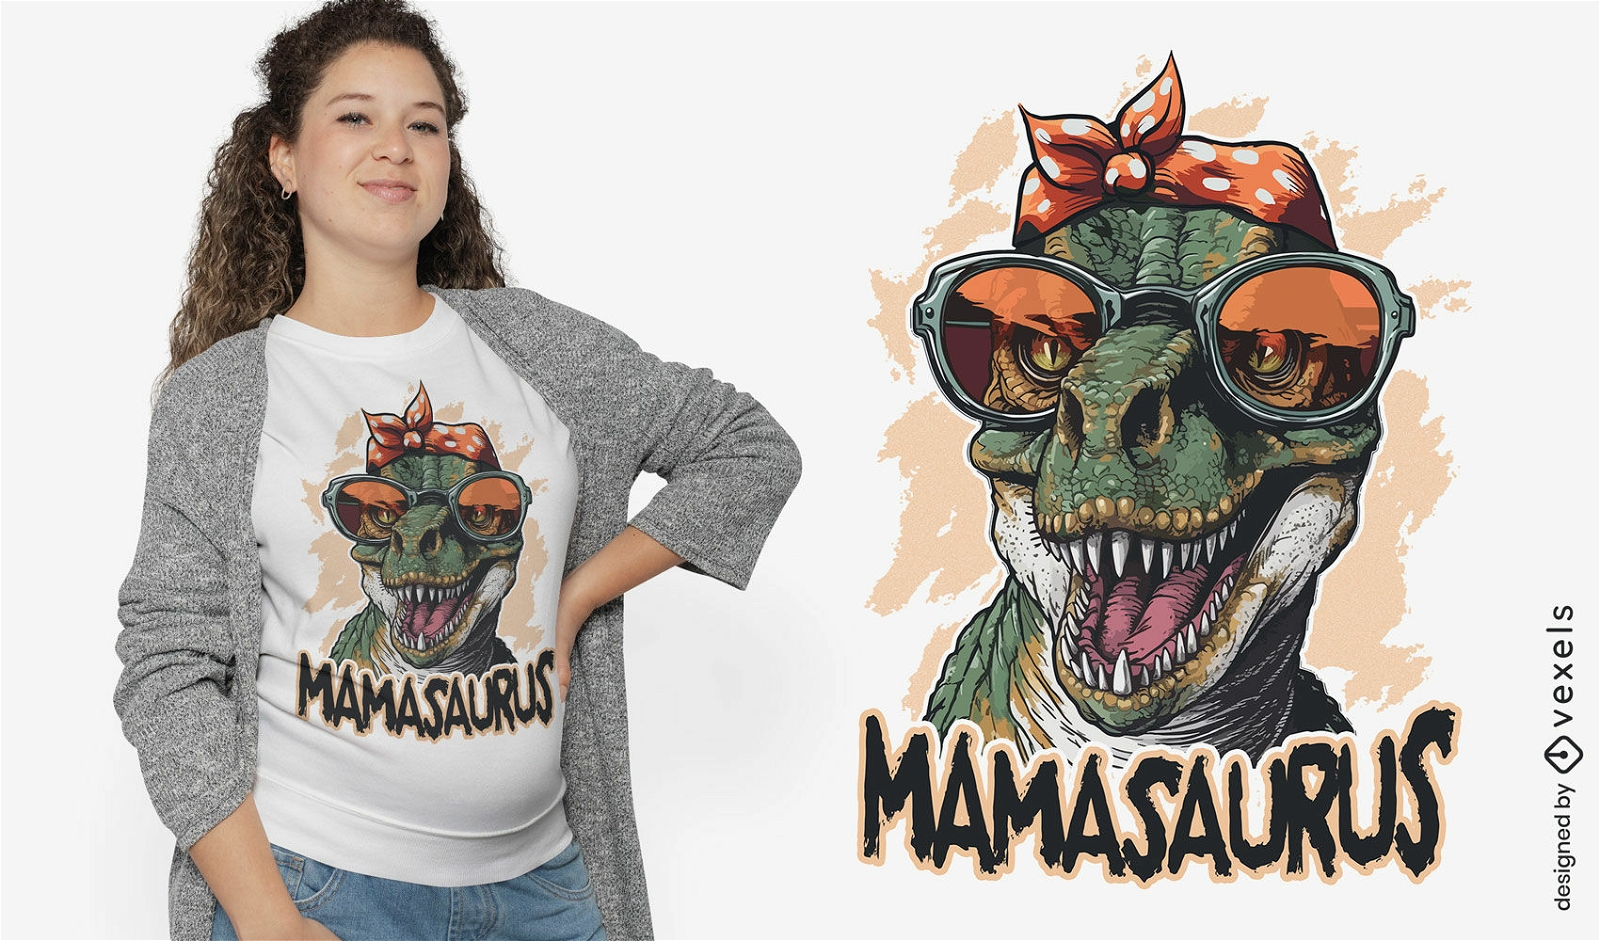 Cool mamasaurus t-shirt design